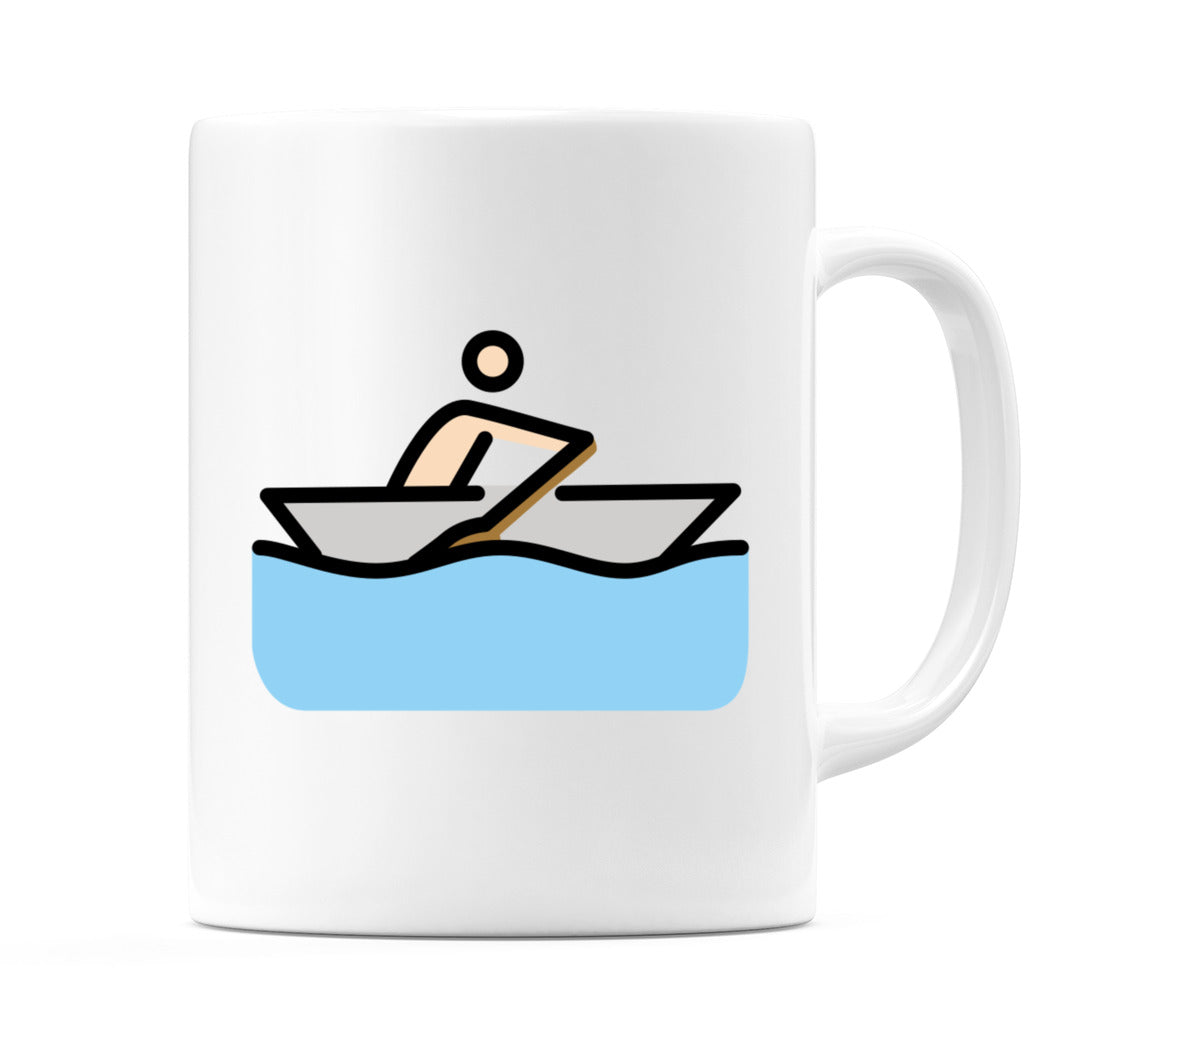 Person Rowing Boat: Light Skin Tone Emoji Mug